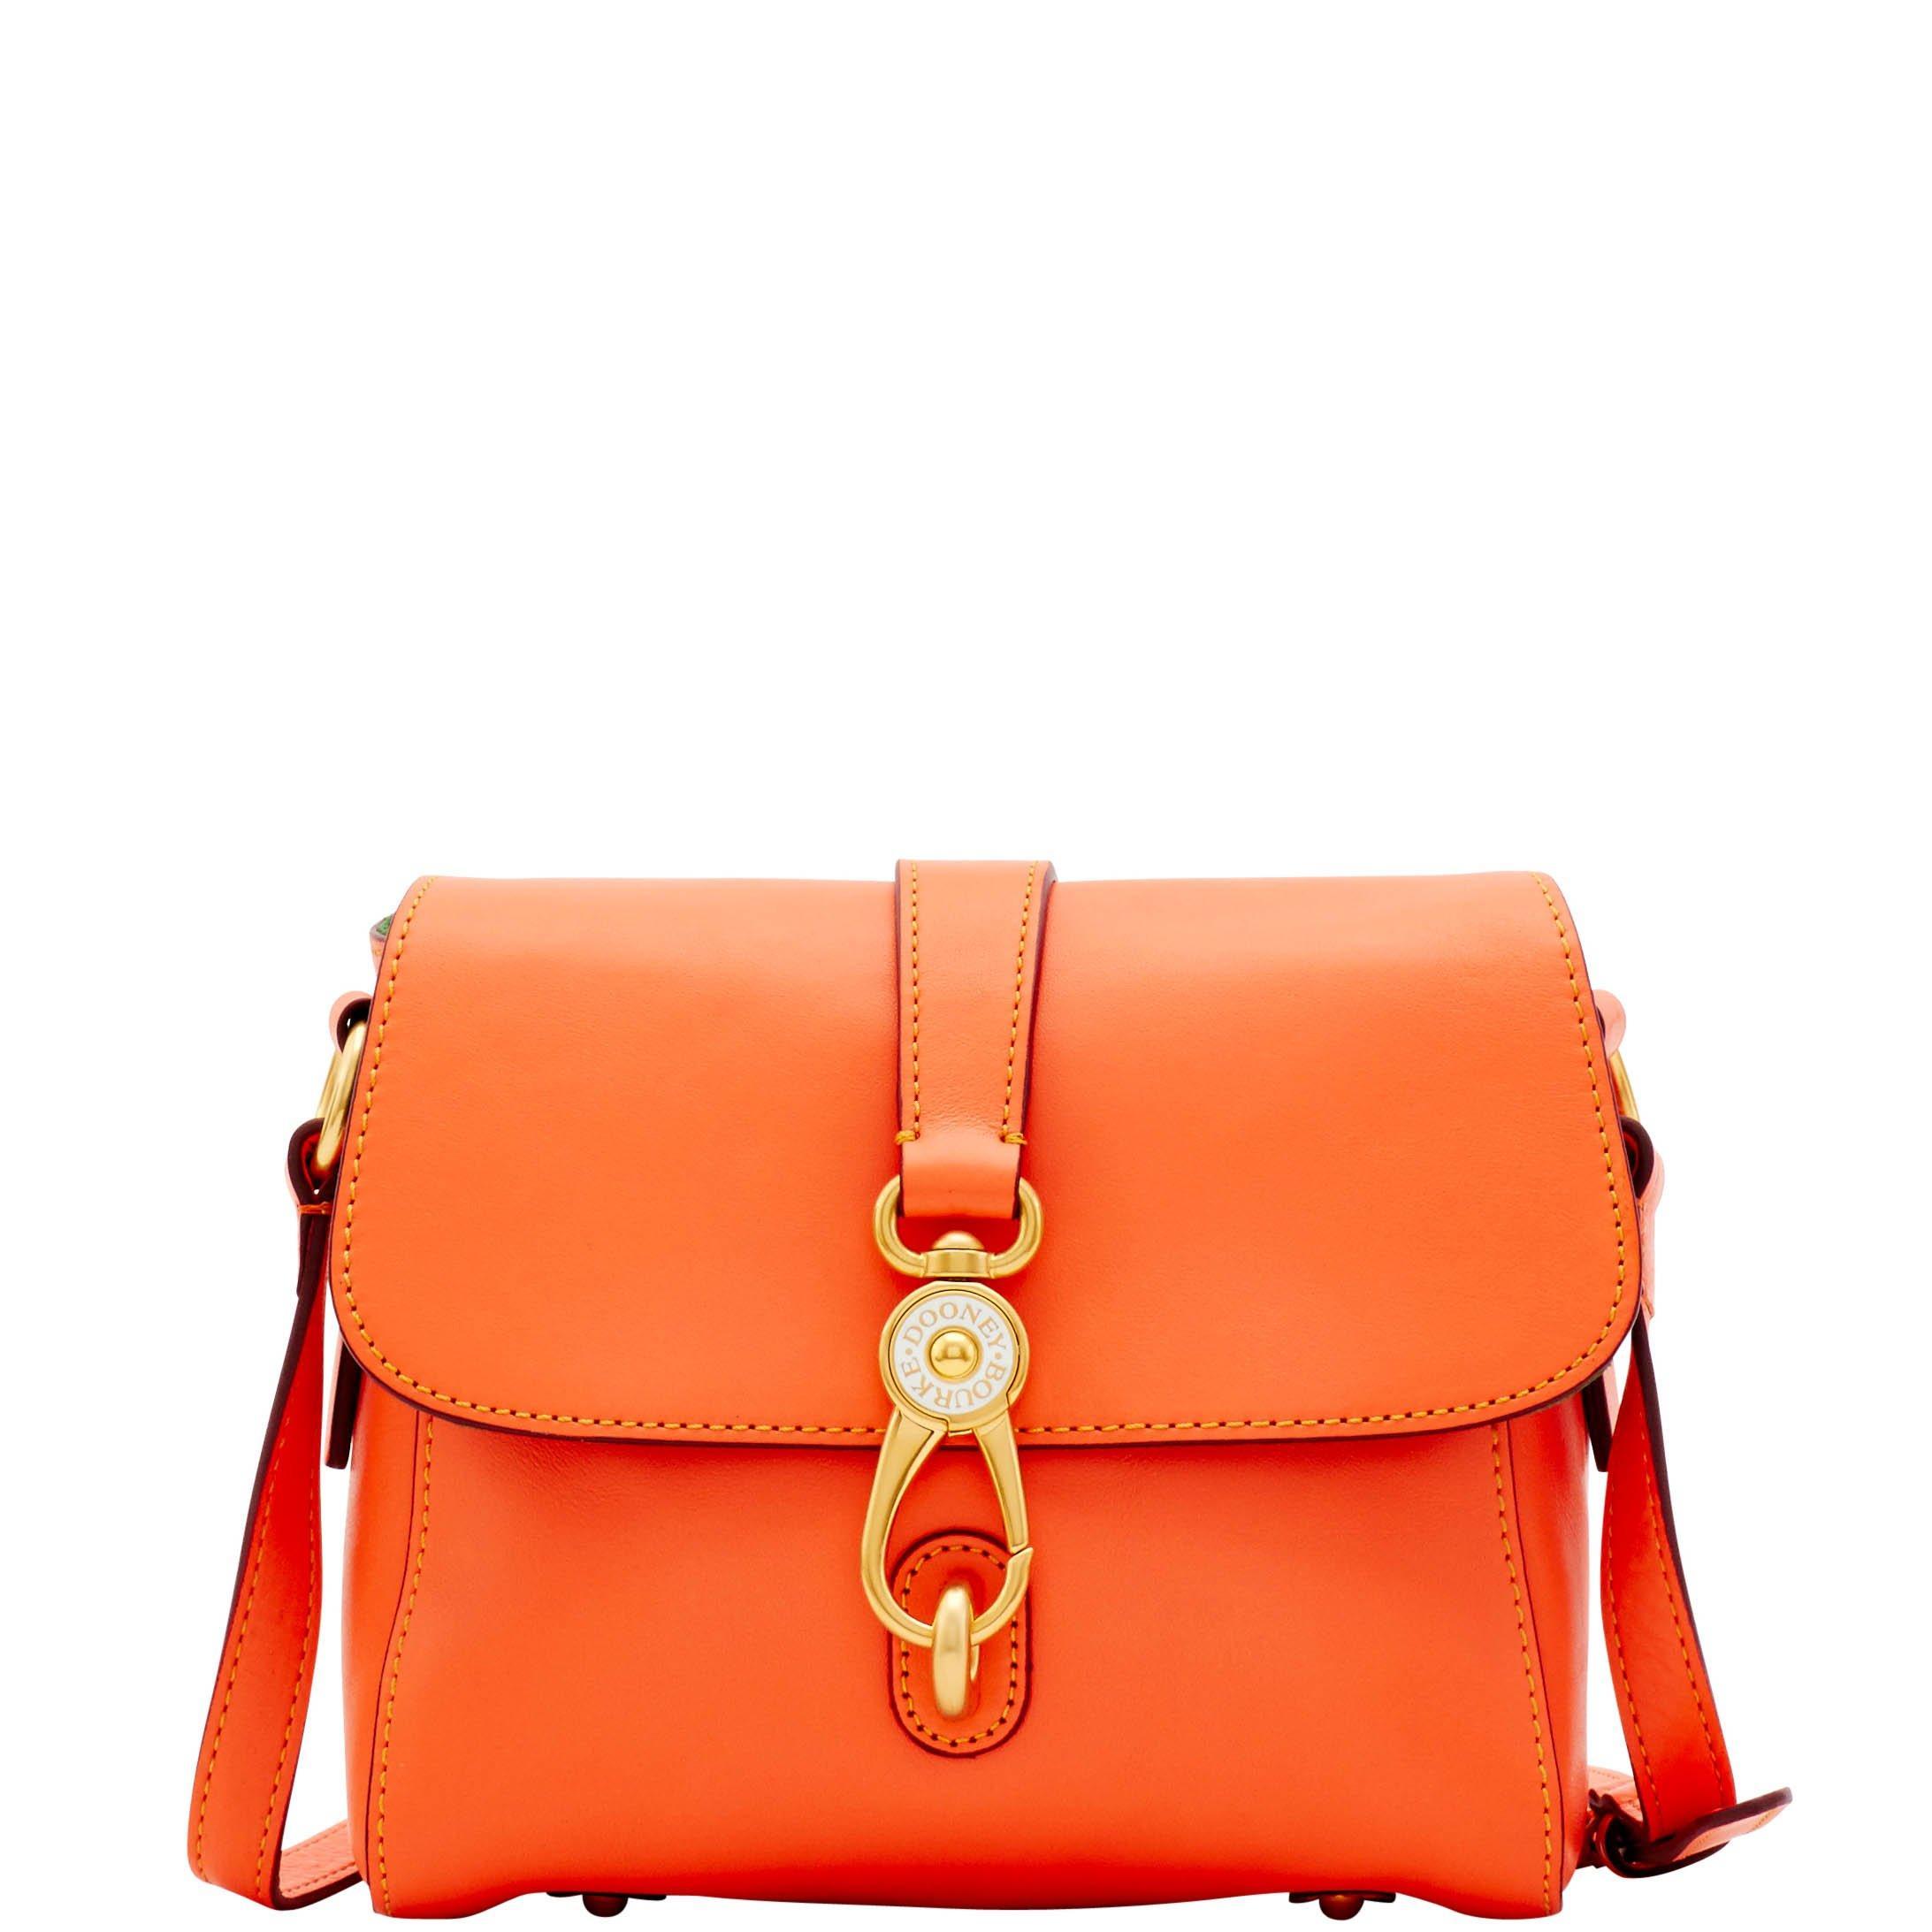 Dooney & Bourke Florentine Small Ashley Messenger Bag in Orange - Lyst